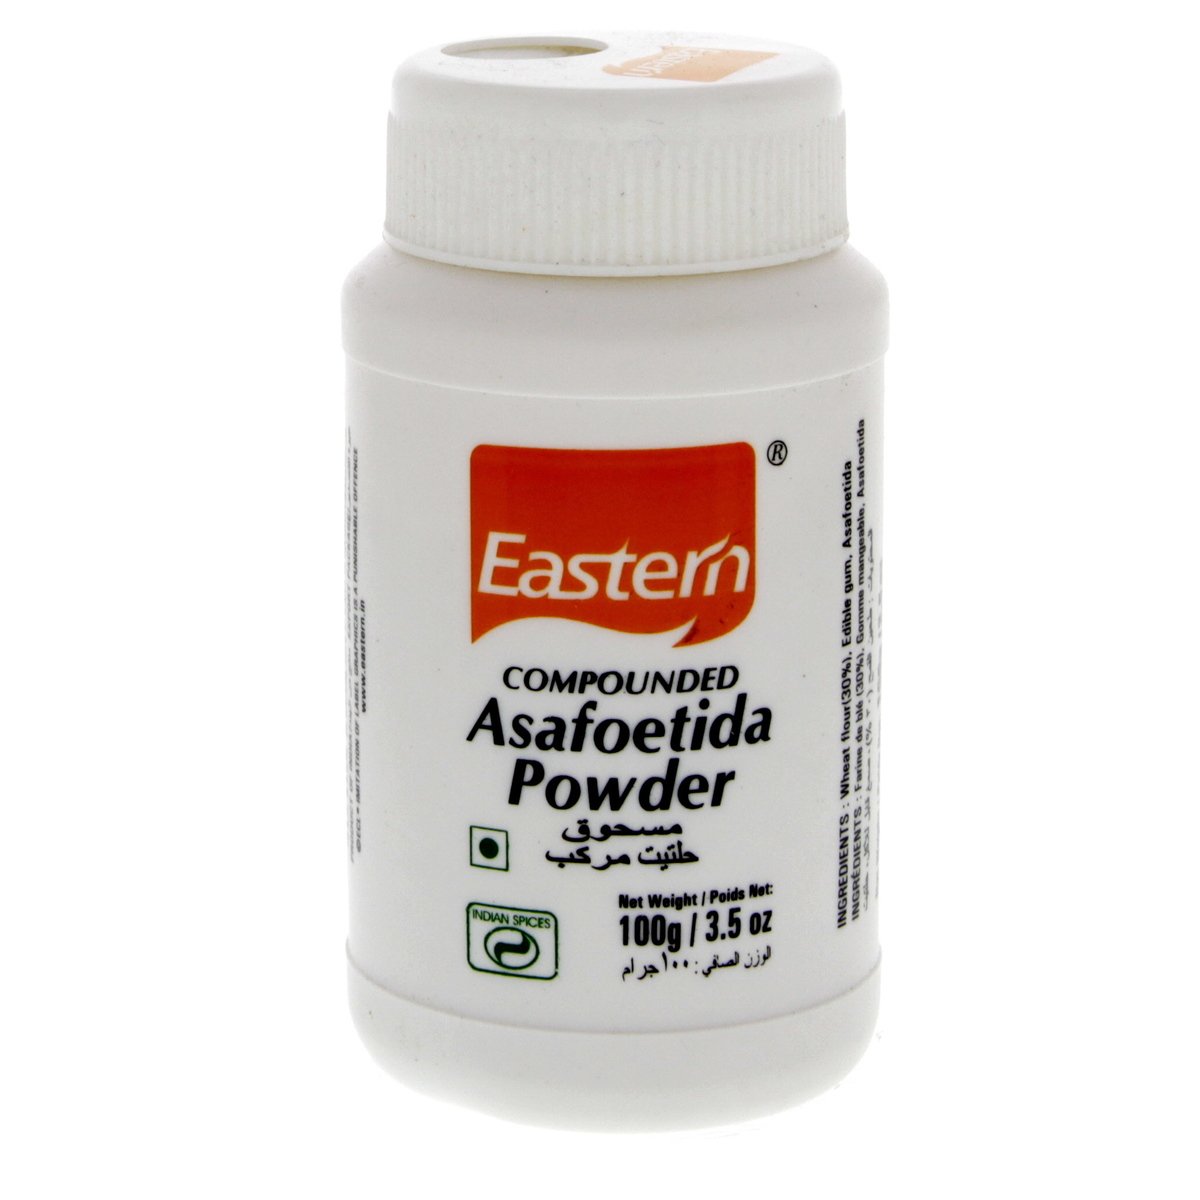 Eastern Compounded Asafoetida Powder 100 g